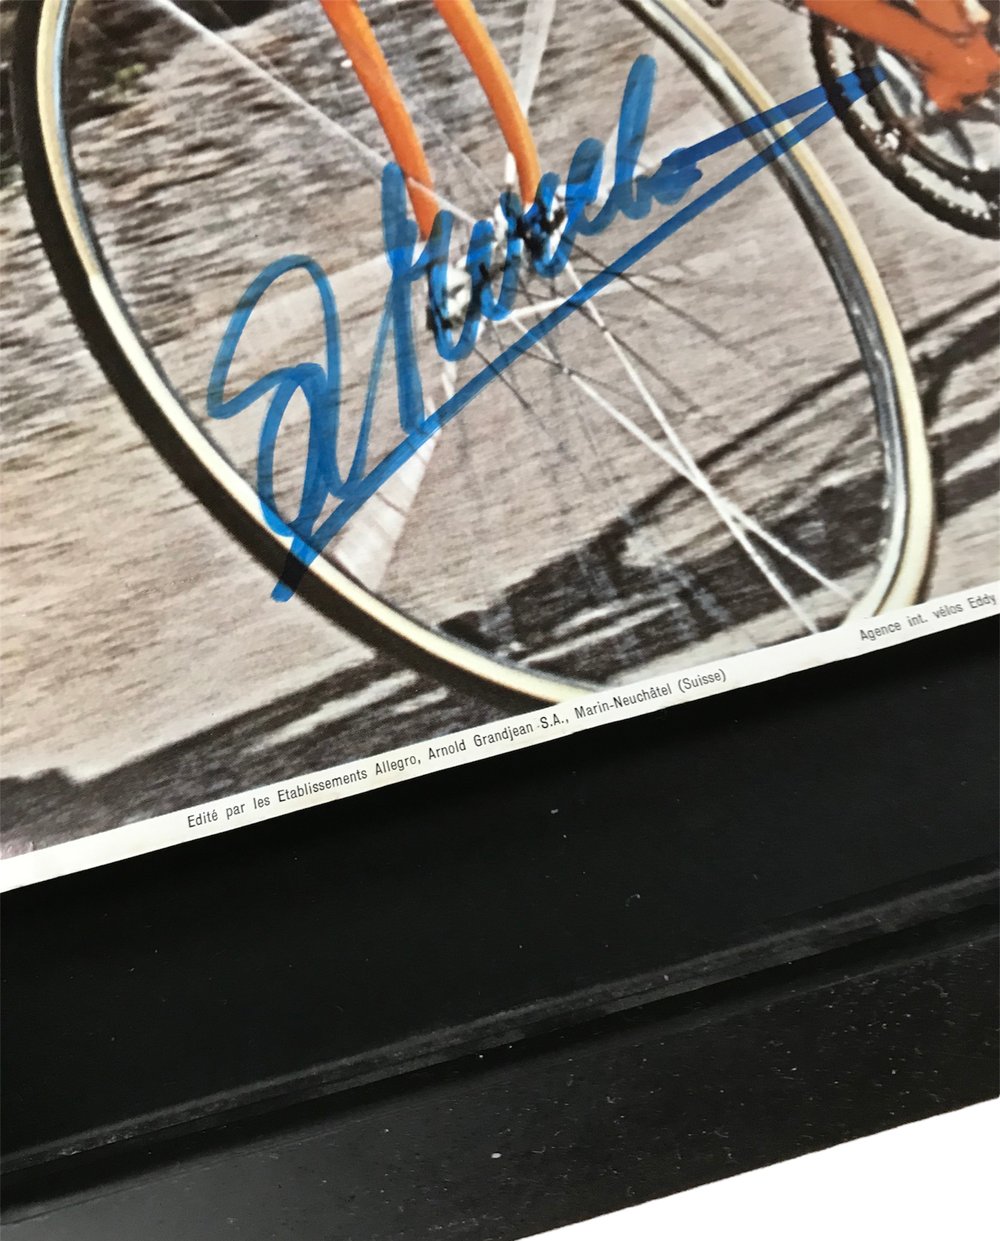 Poster of Eddy Merckx 